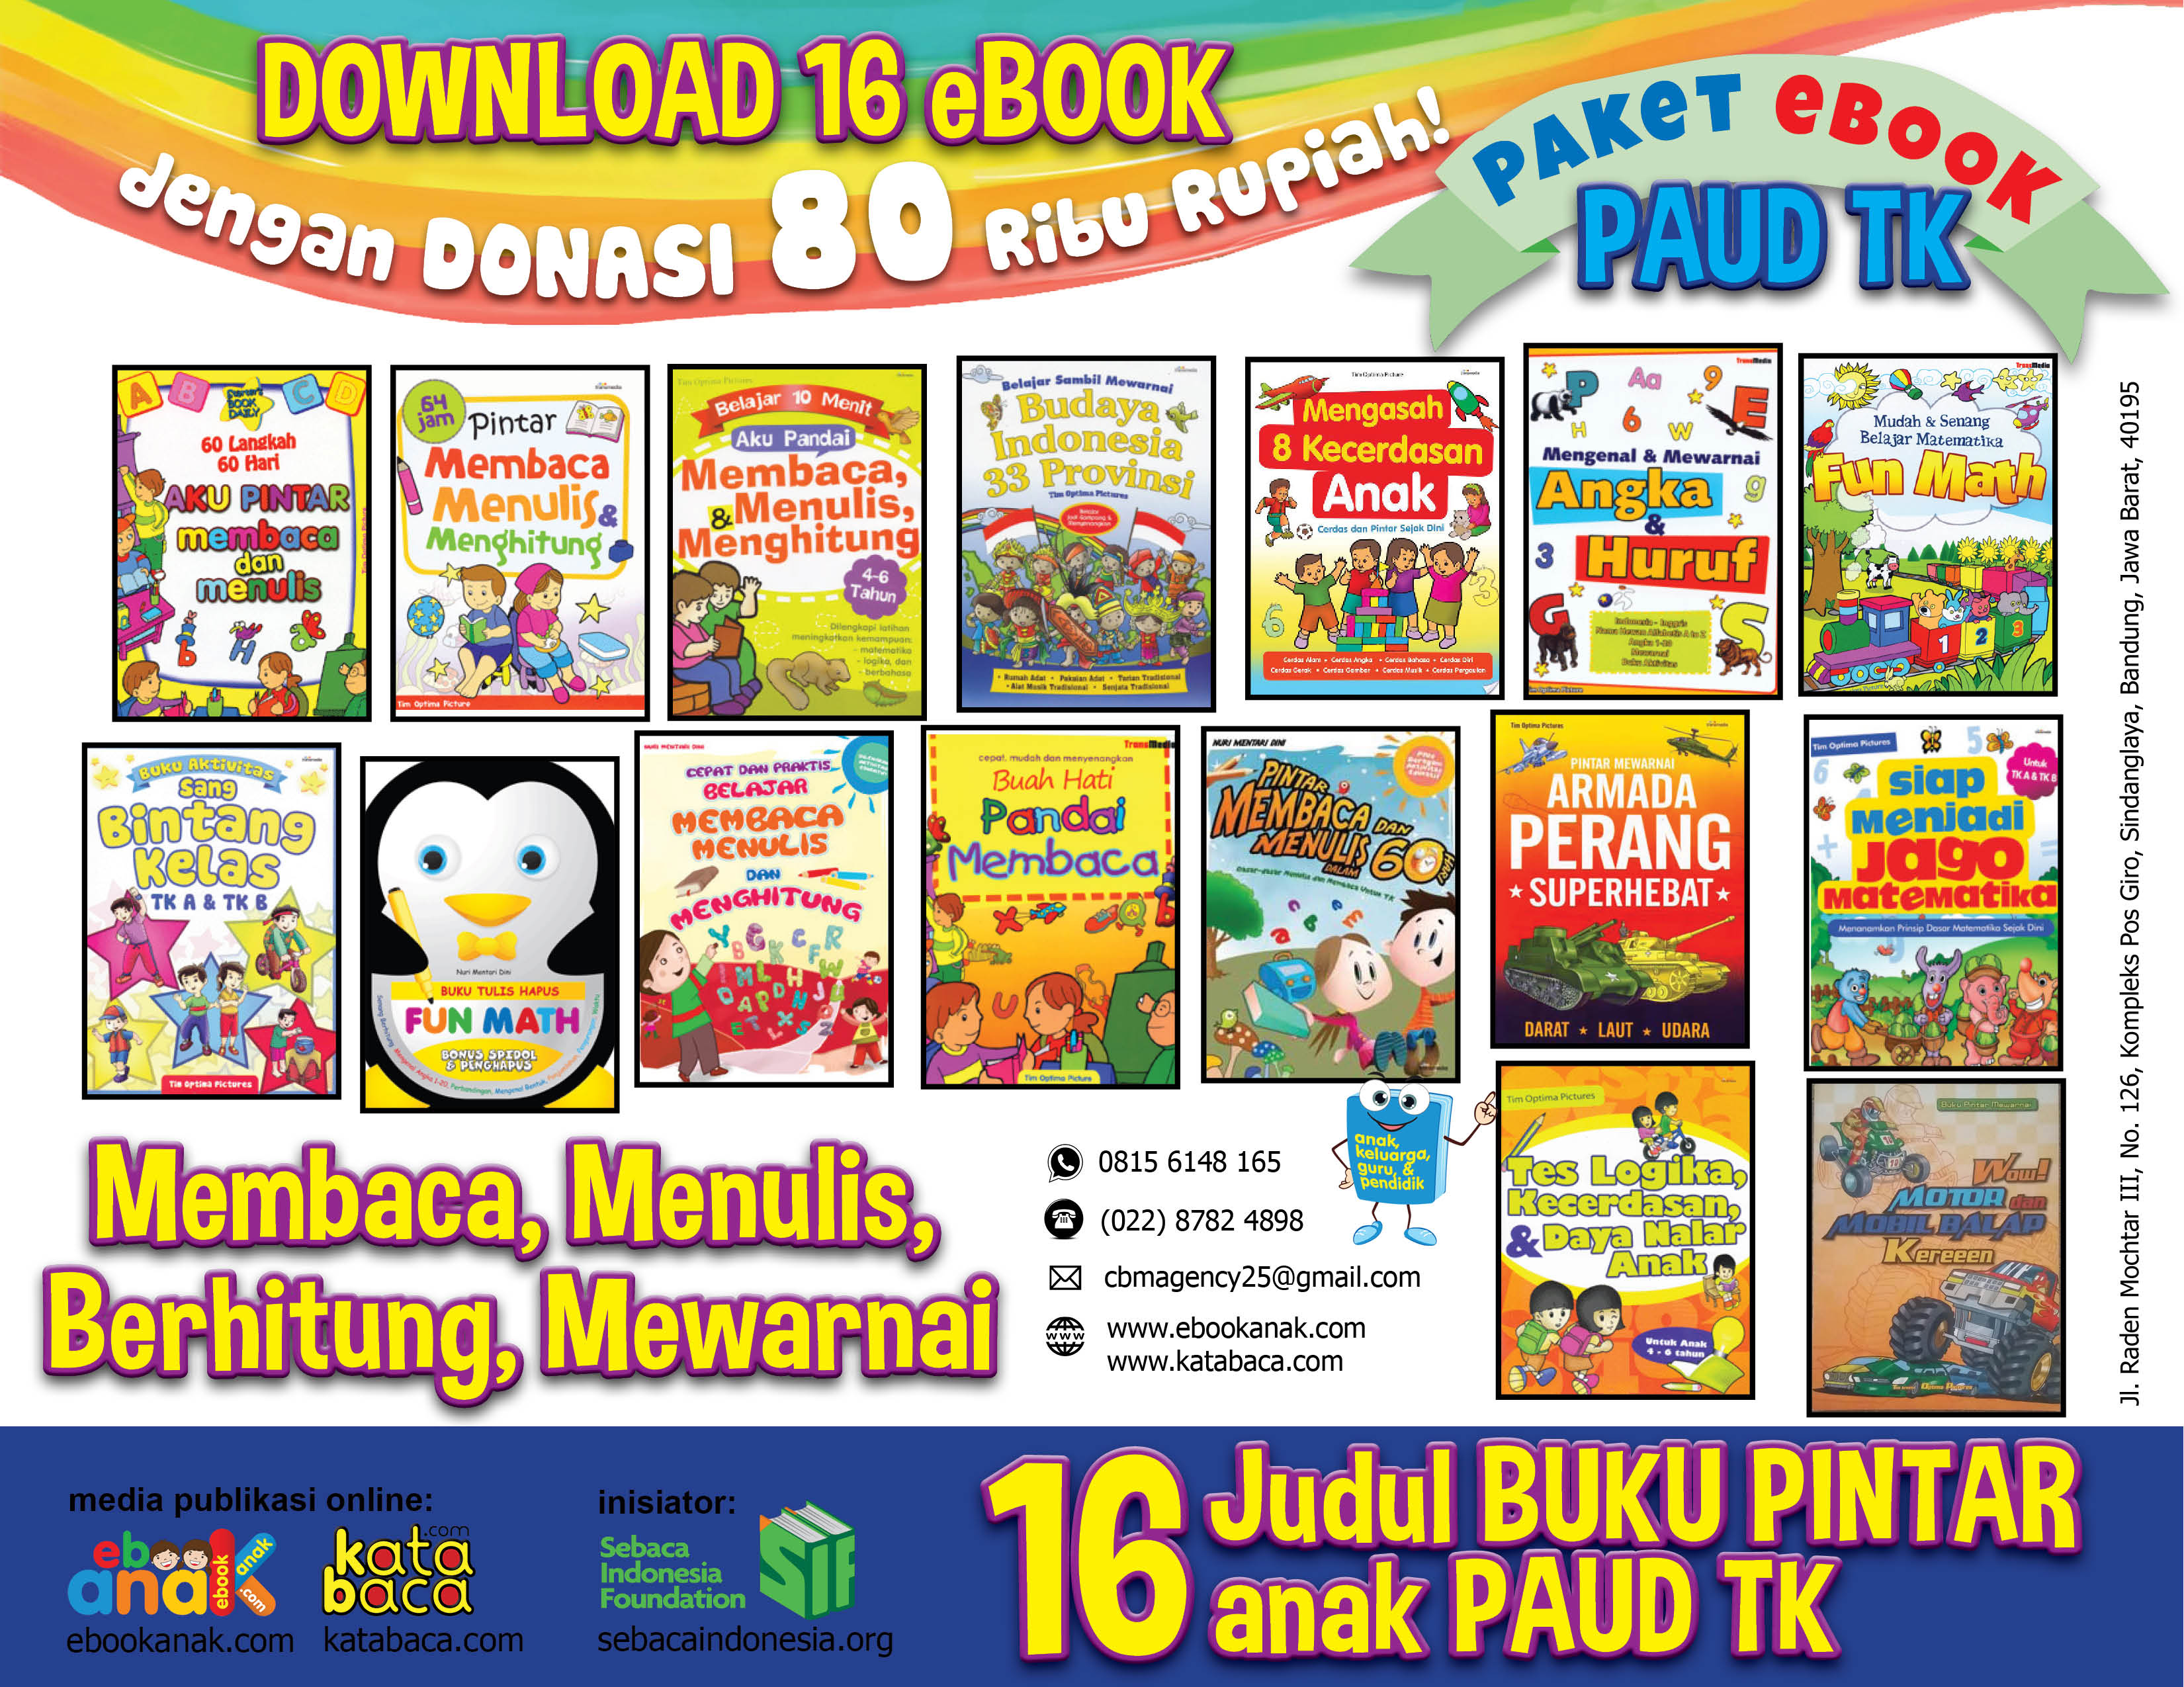 download 16 ebook paket paud tk donasi 80 ribu rupiah